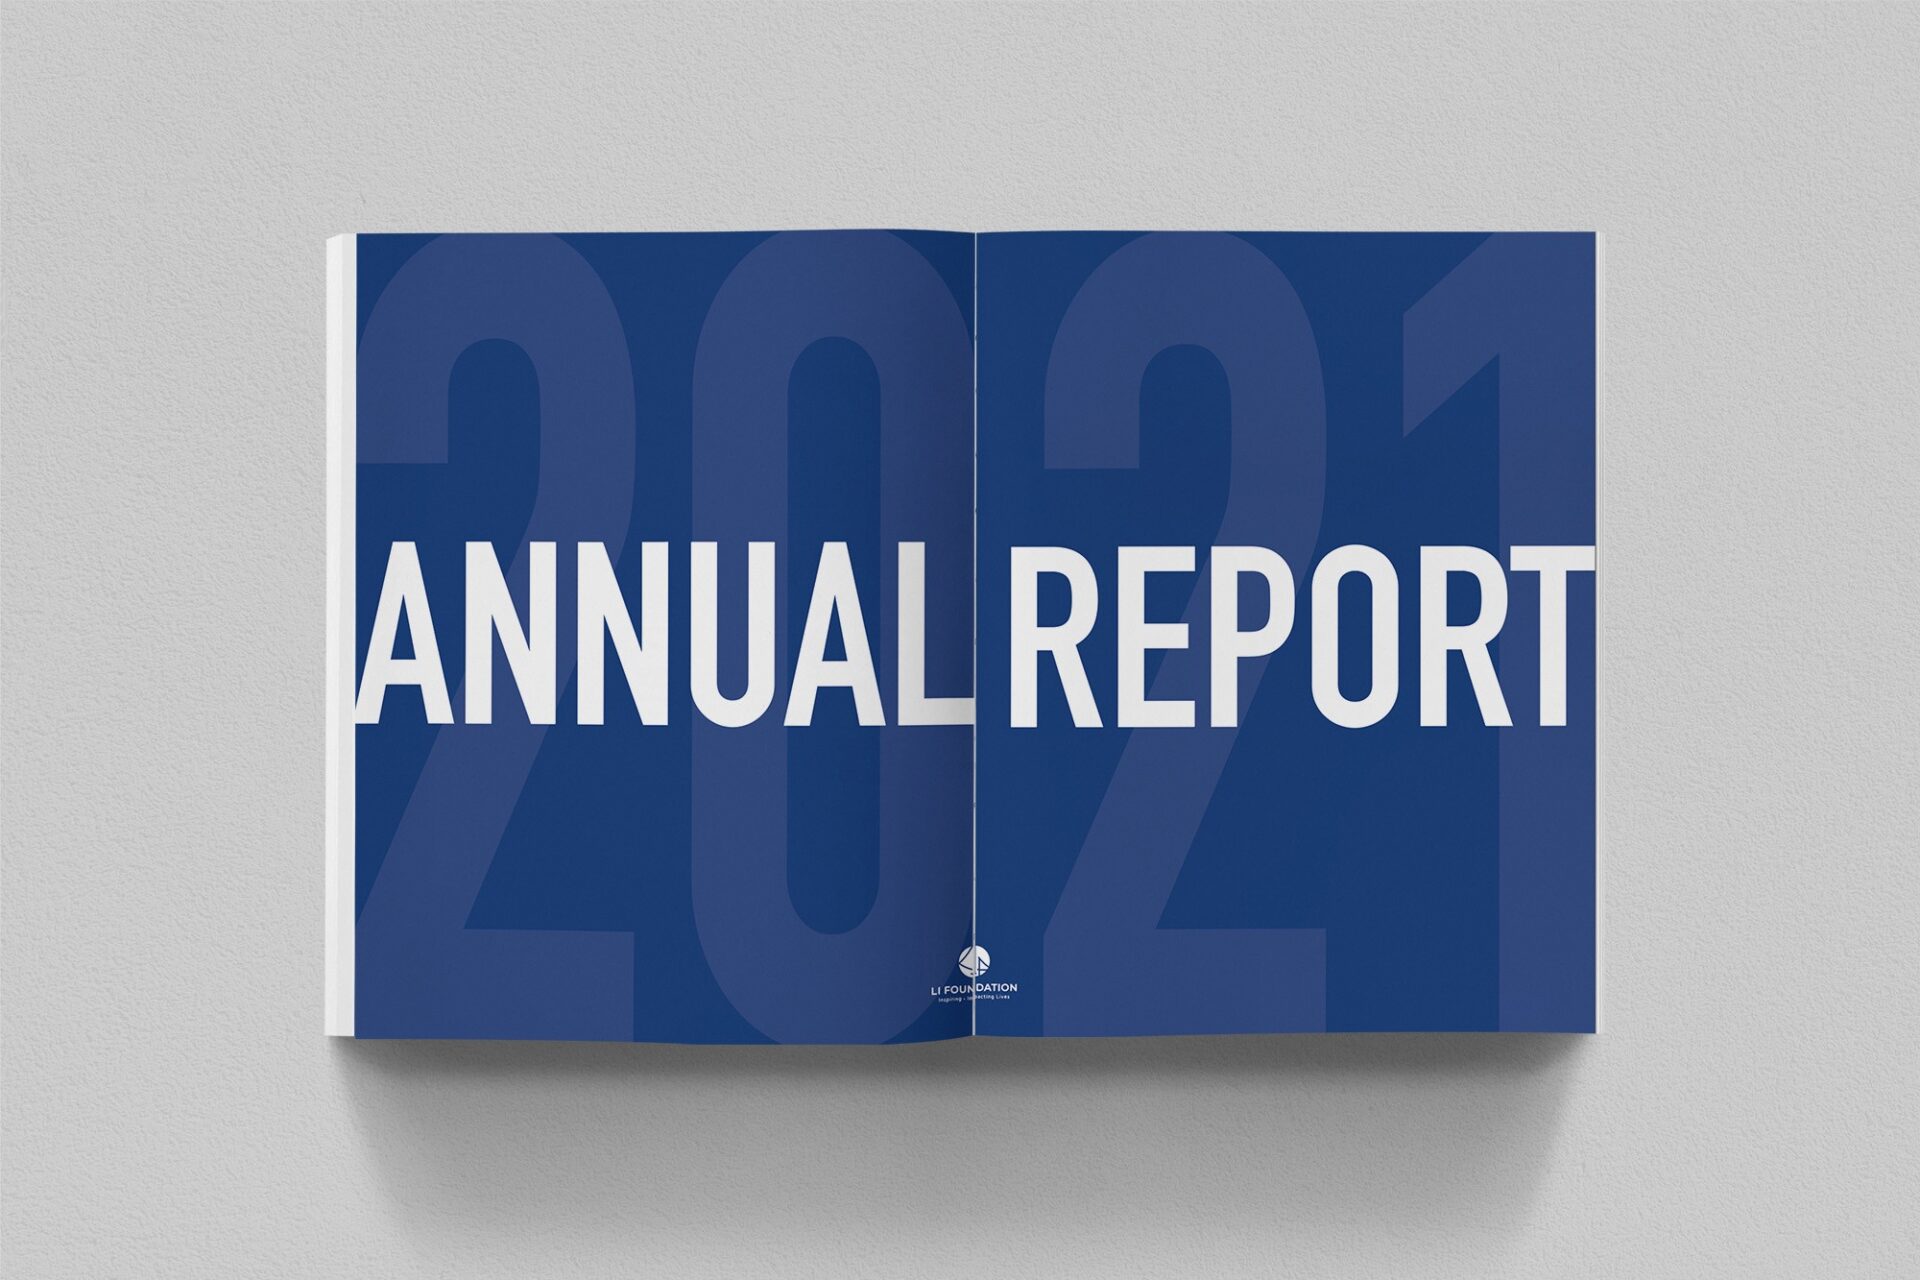 Li Foundation Annual Report 2021